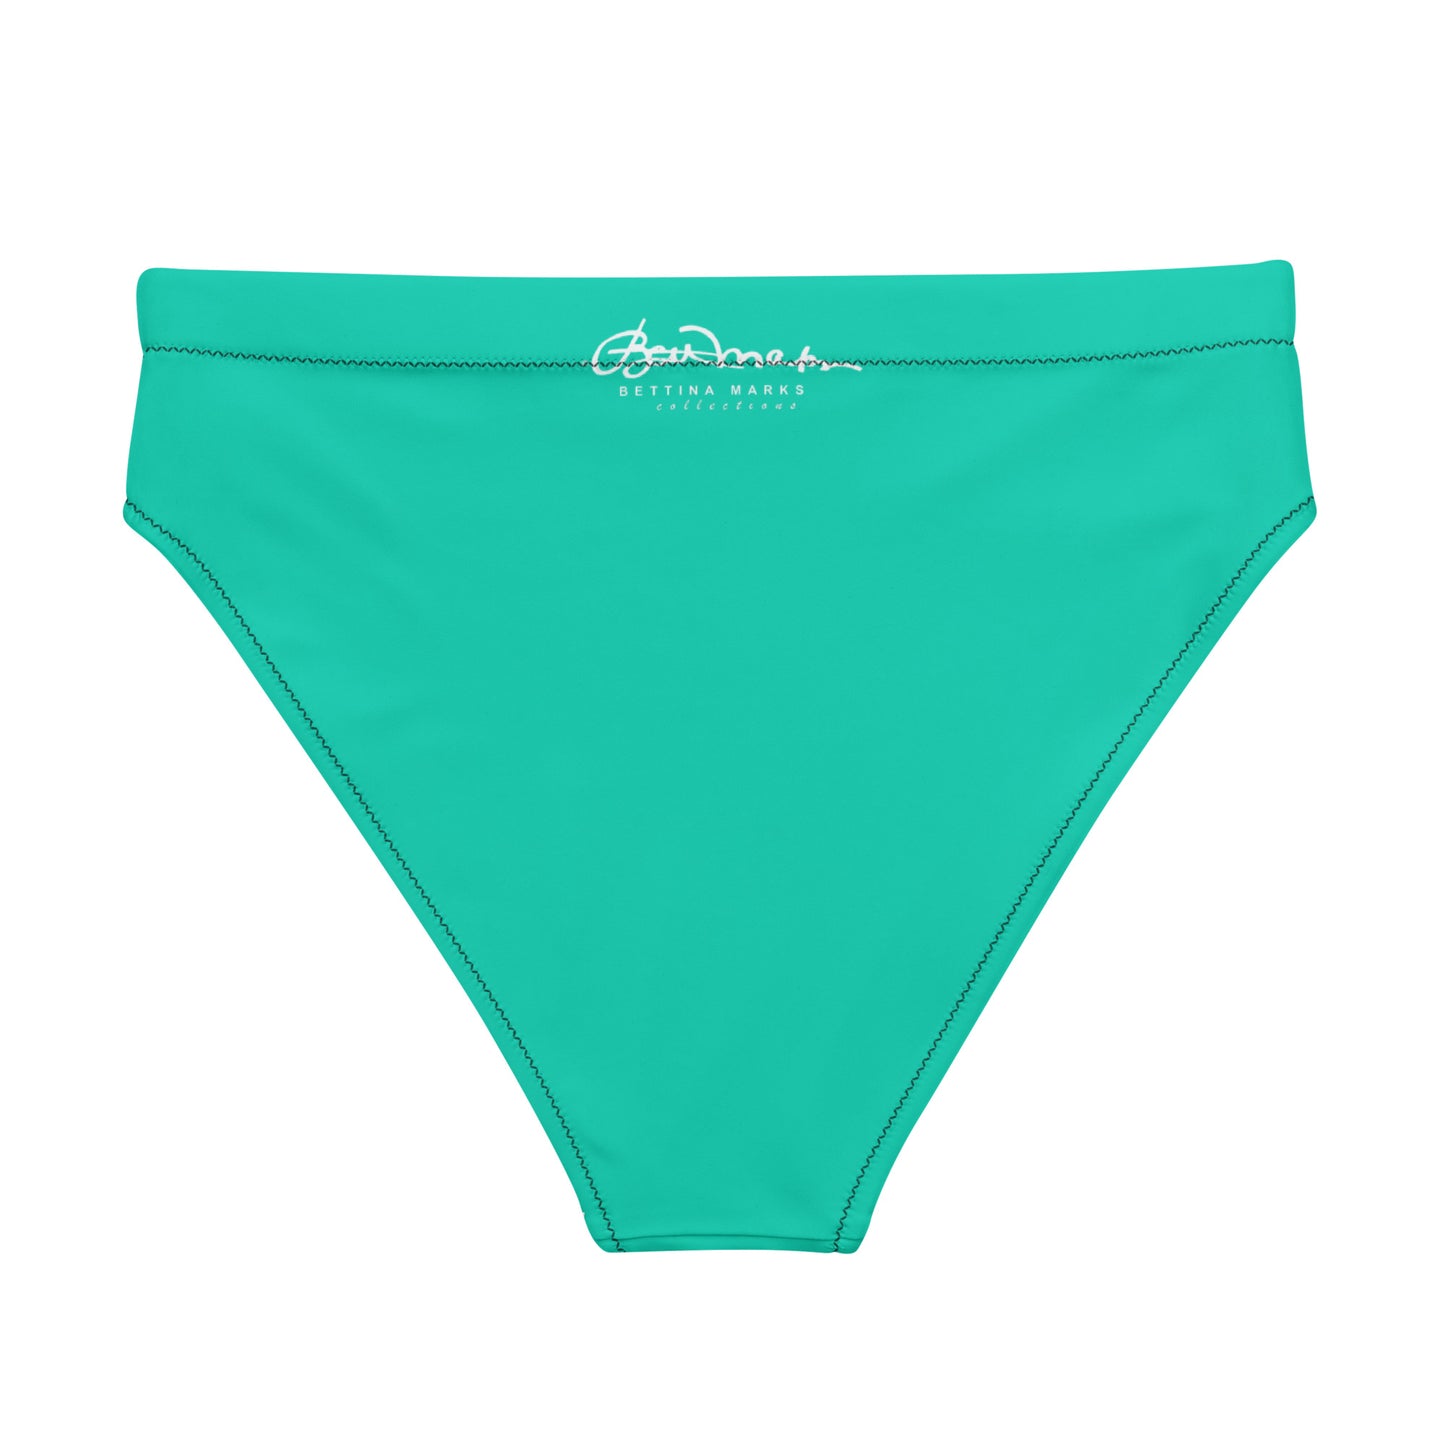 Aegean Blue Recycled high-waisted bikini bathing suit bottom